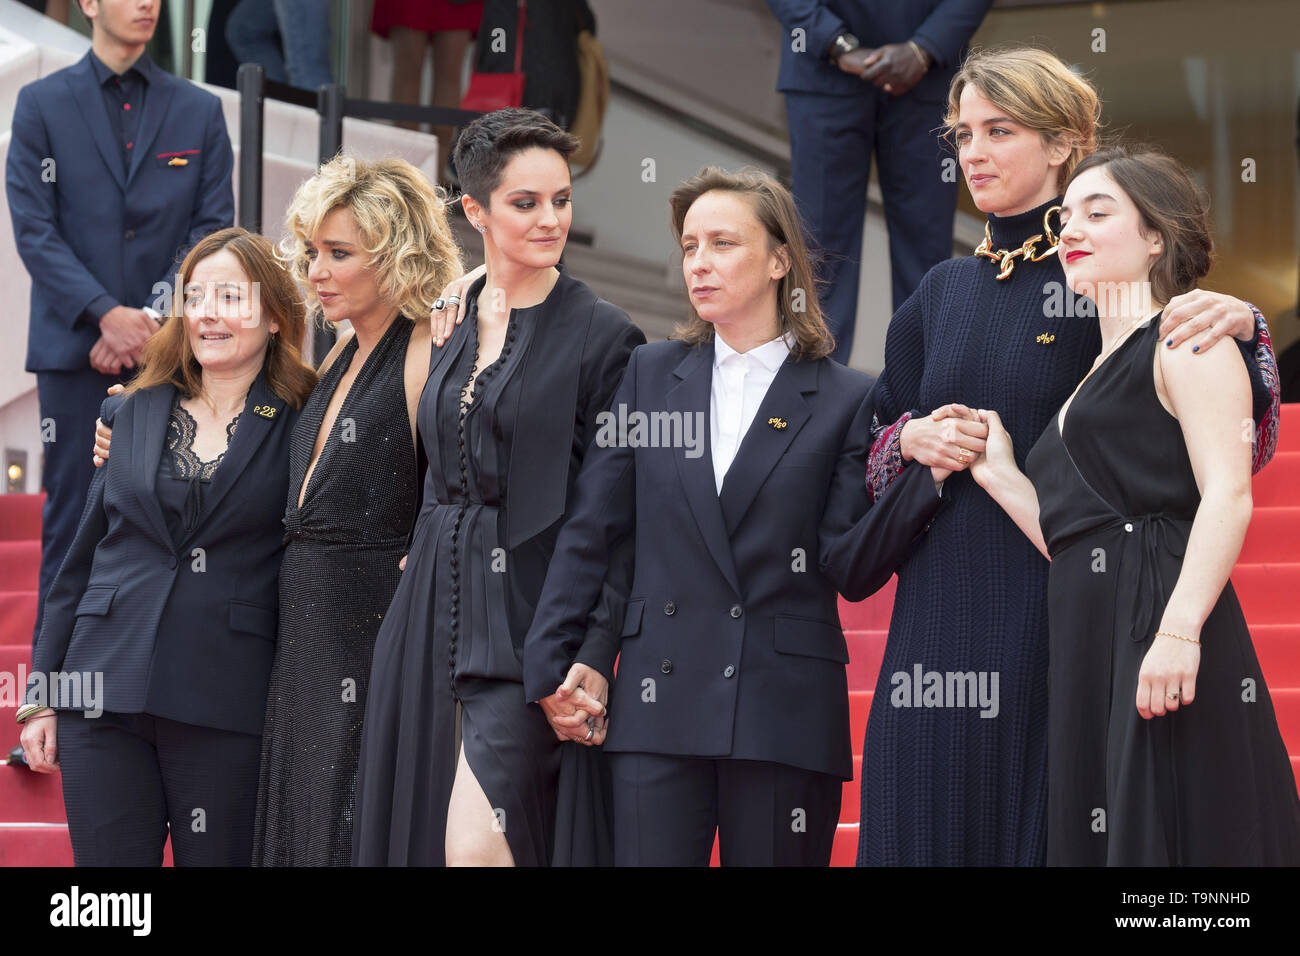 Noémie Merlant in Louis Vuitton at the 'Portrait of a Lady on Fire' 63rd  BFI London Film Festival Premiere